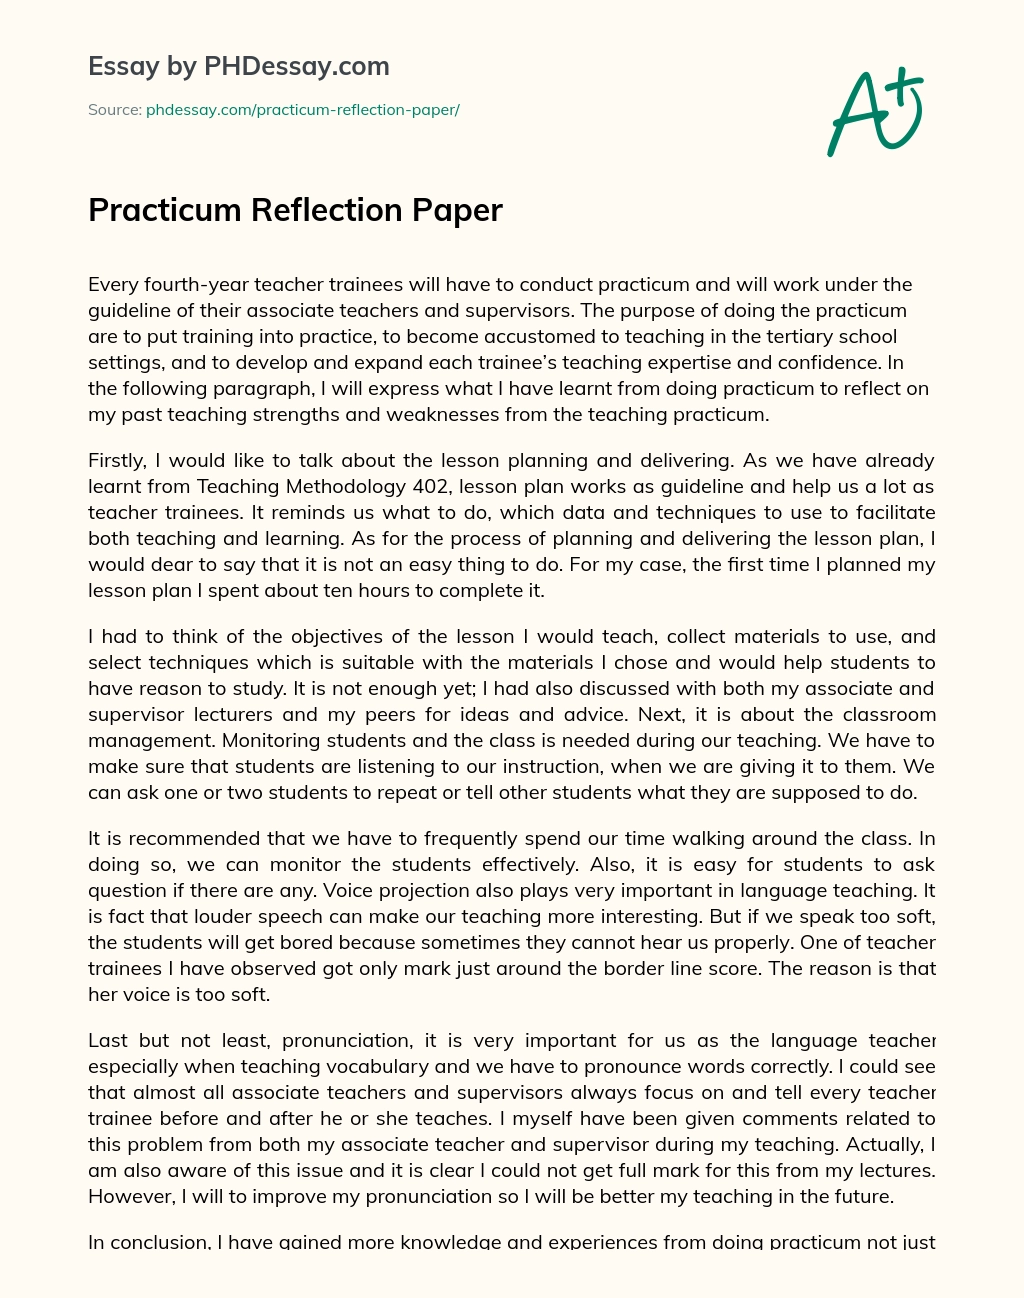 Practicum Reflection Paper essay